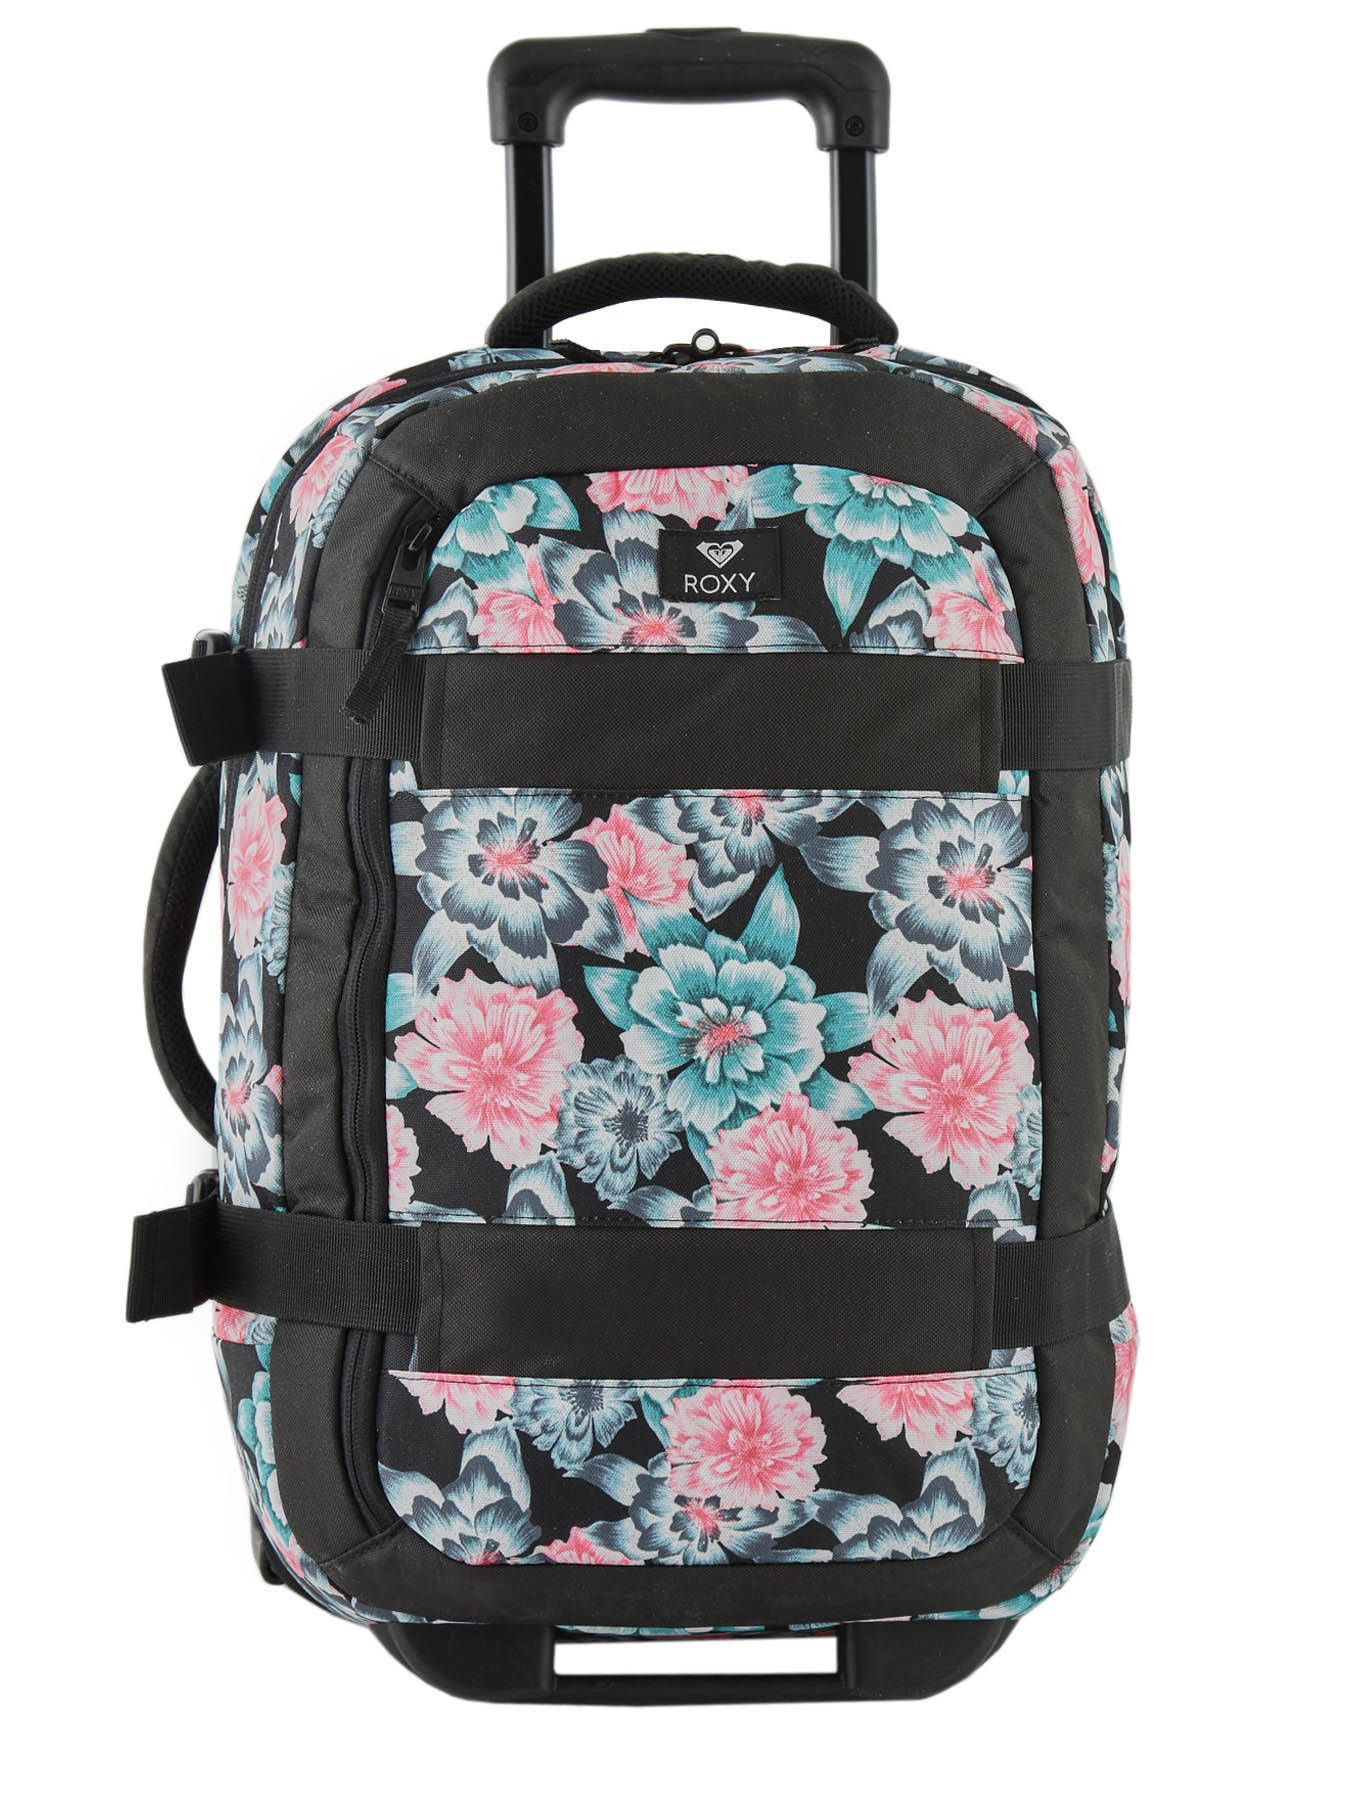 Roxy Carry on travel bag H19.WHEELIE - best prices